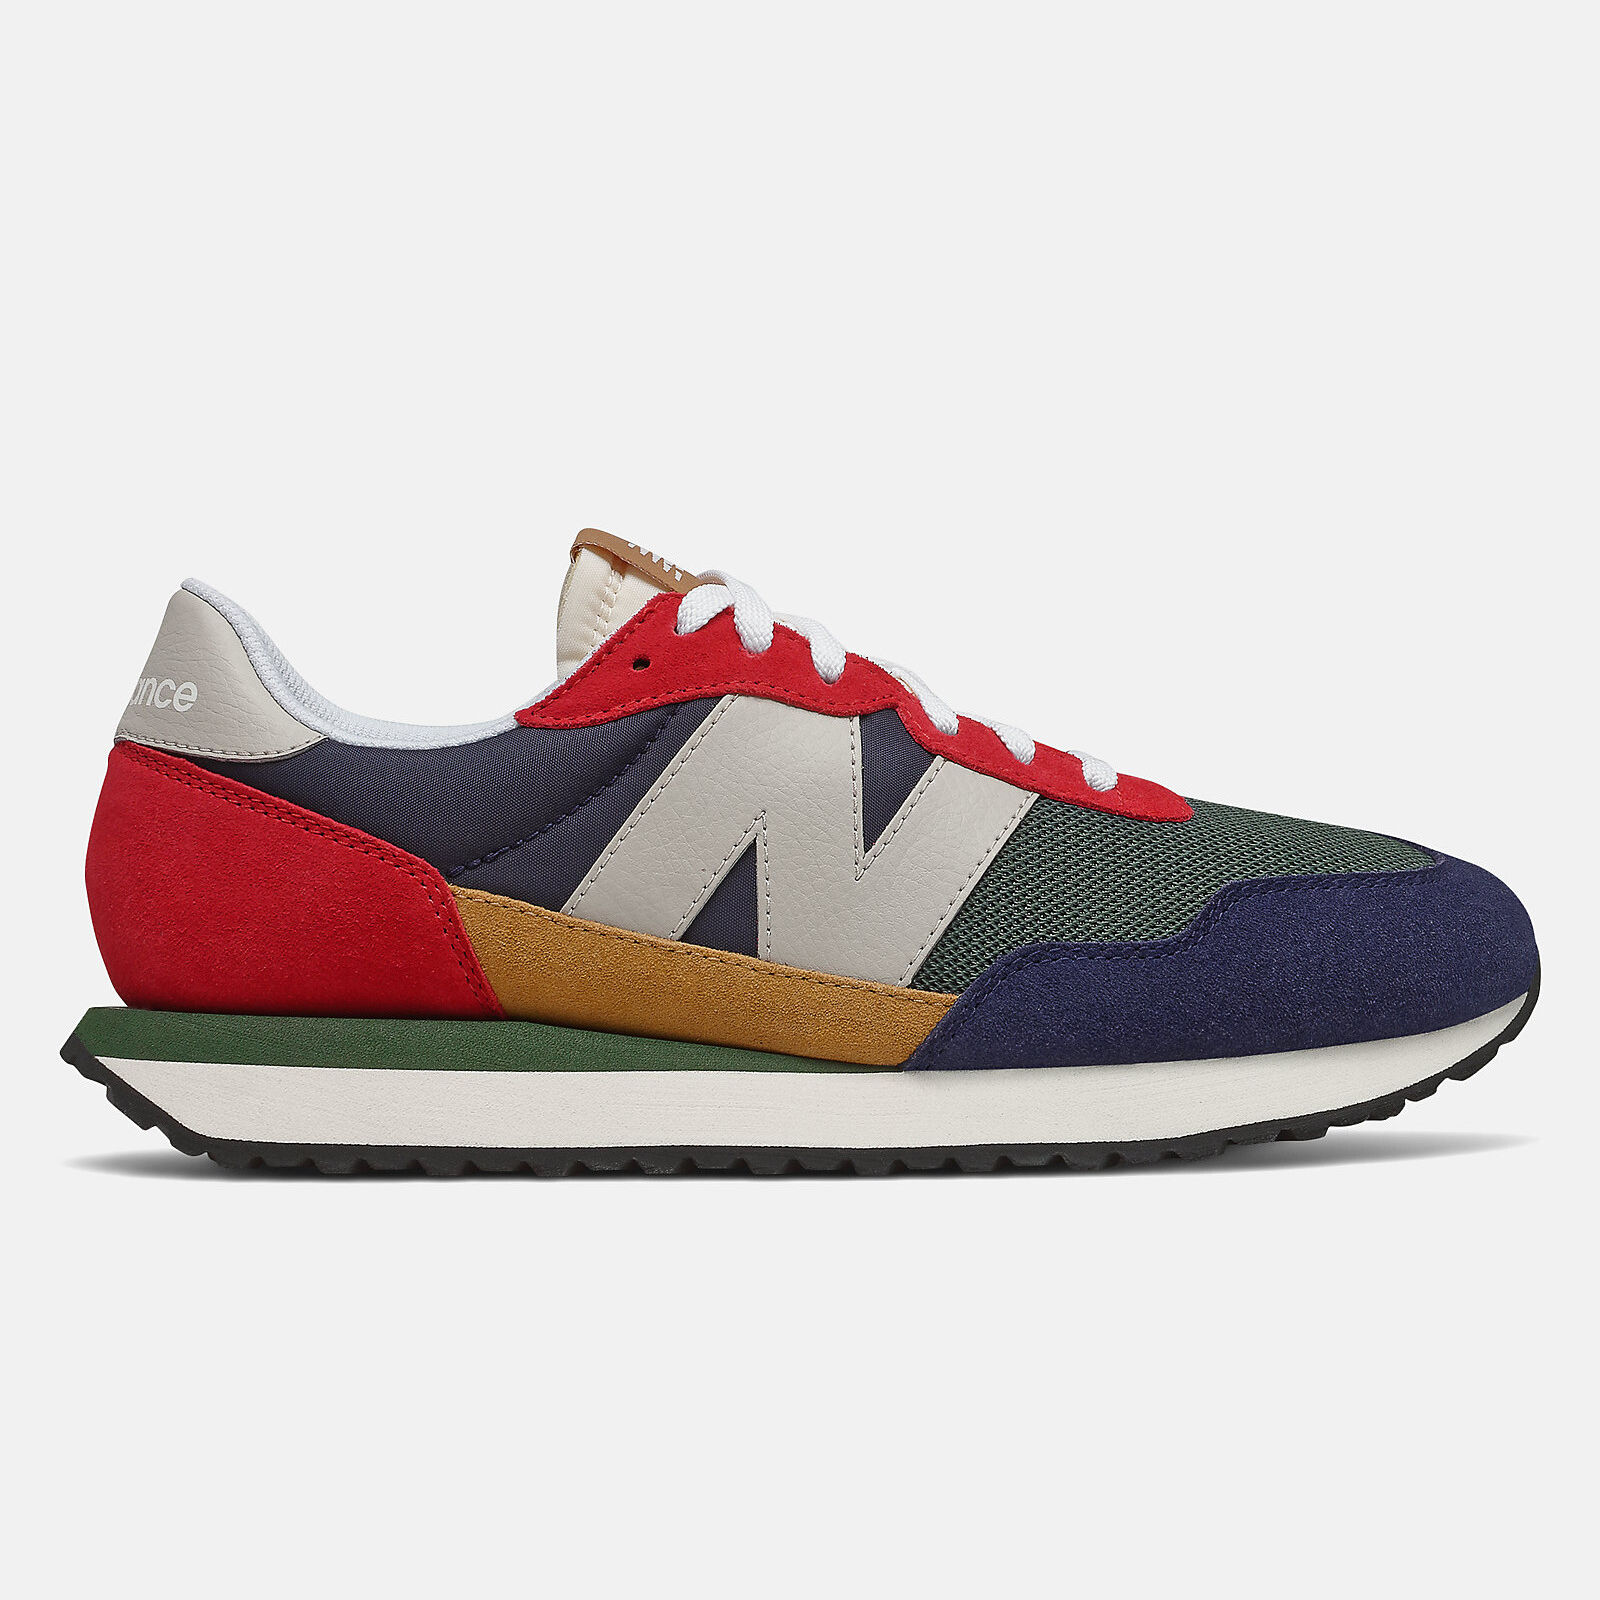 New Balance MS237LA1
Green / Navy / Red